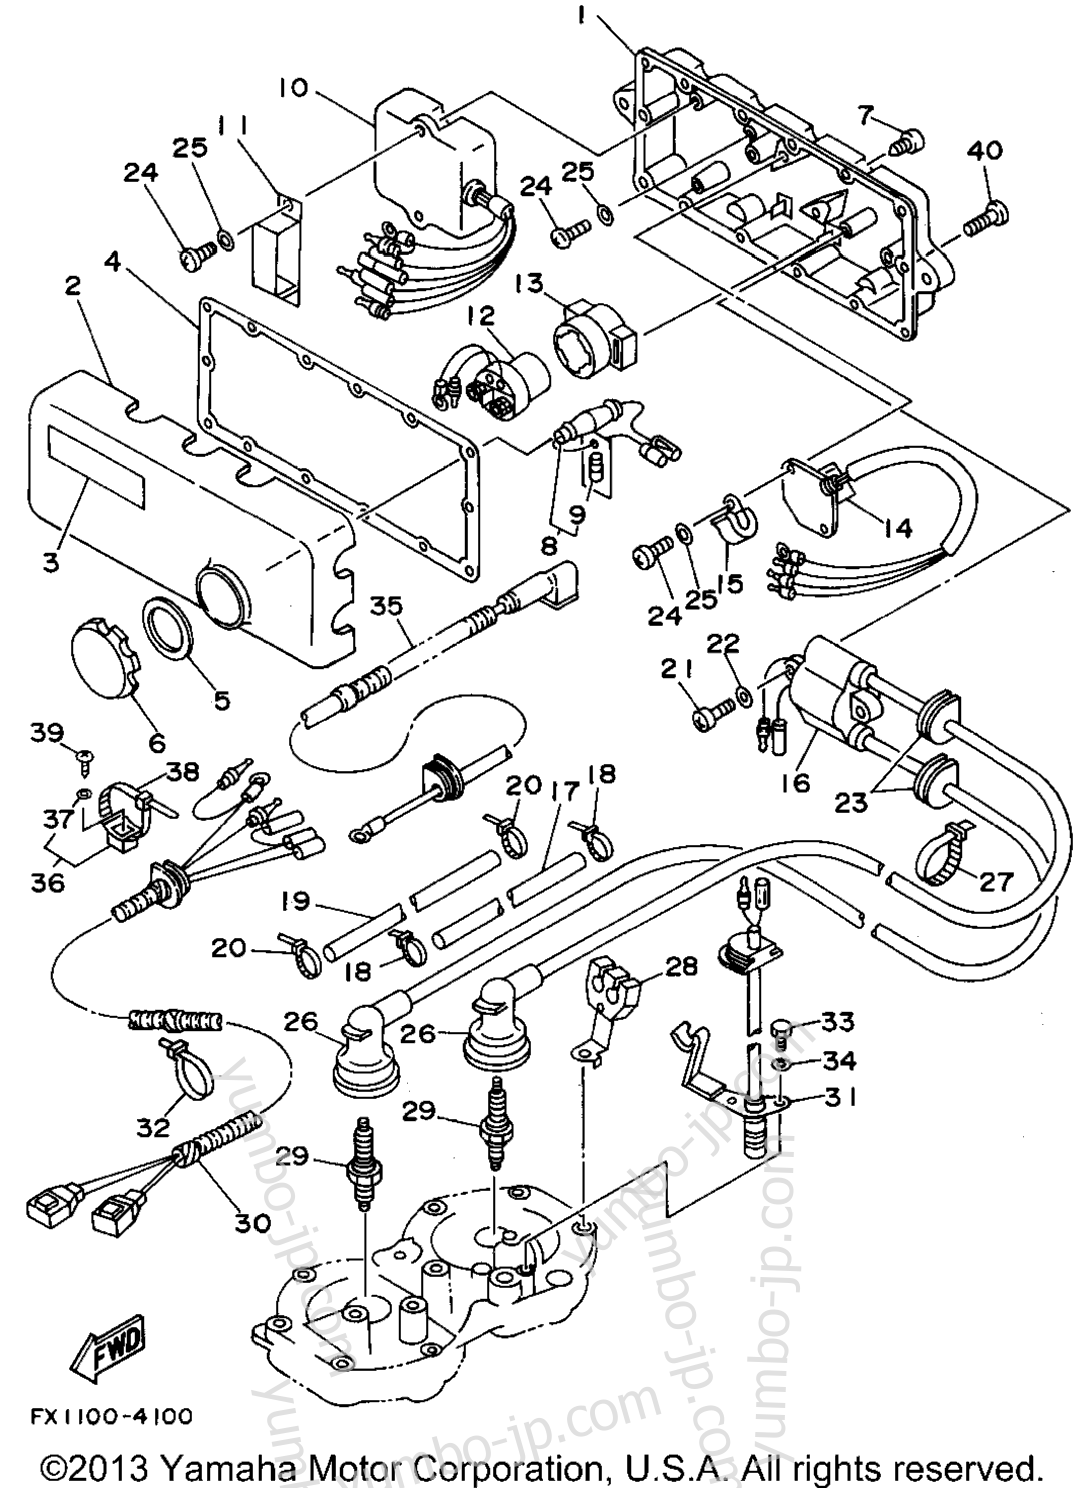 Electrical 1 для гидроциклов YAMAHA FX-1 (FX700S) 1994 г.